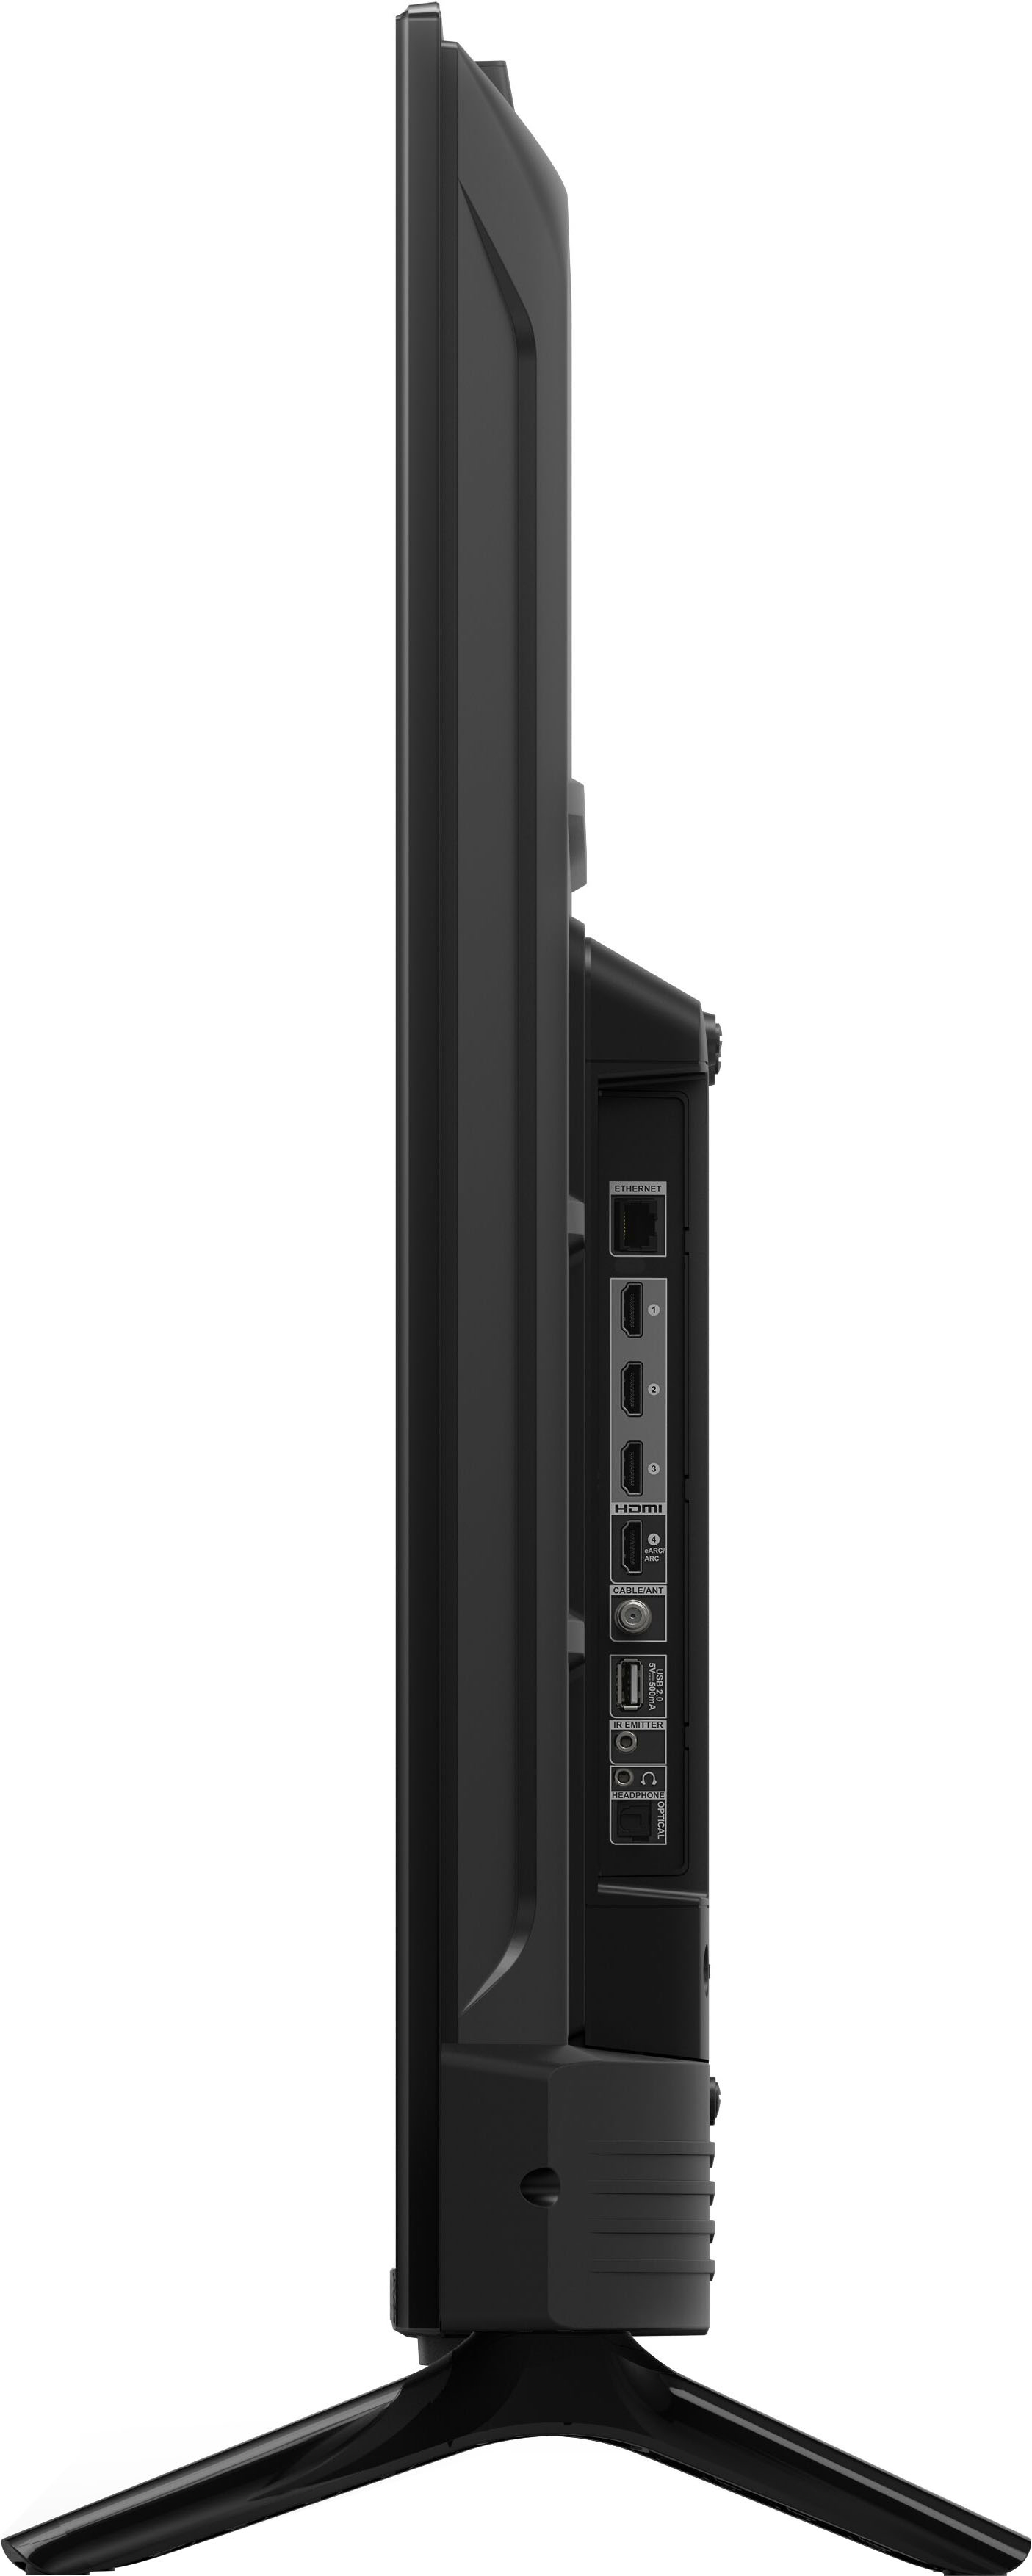 Left View: Amazon - 50" Class Omni Series 4K UHD Smart Fire TV hands-free with Alexa